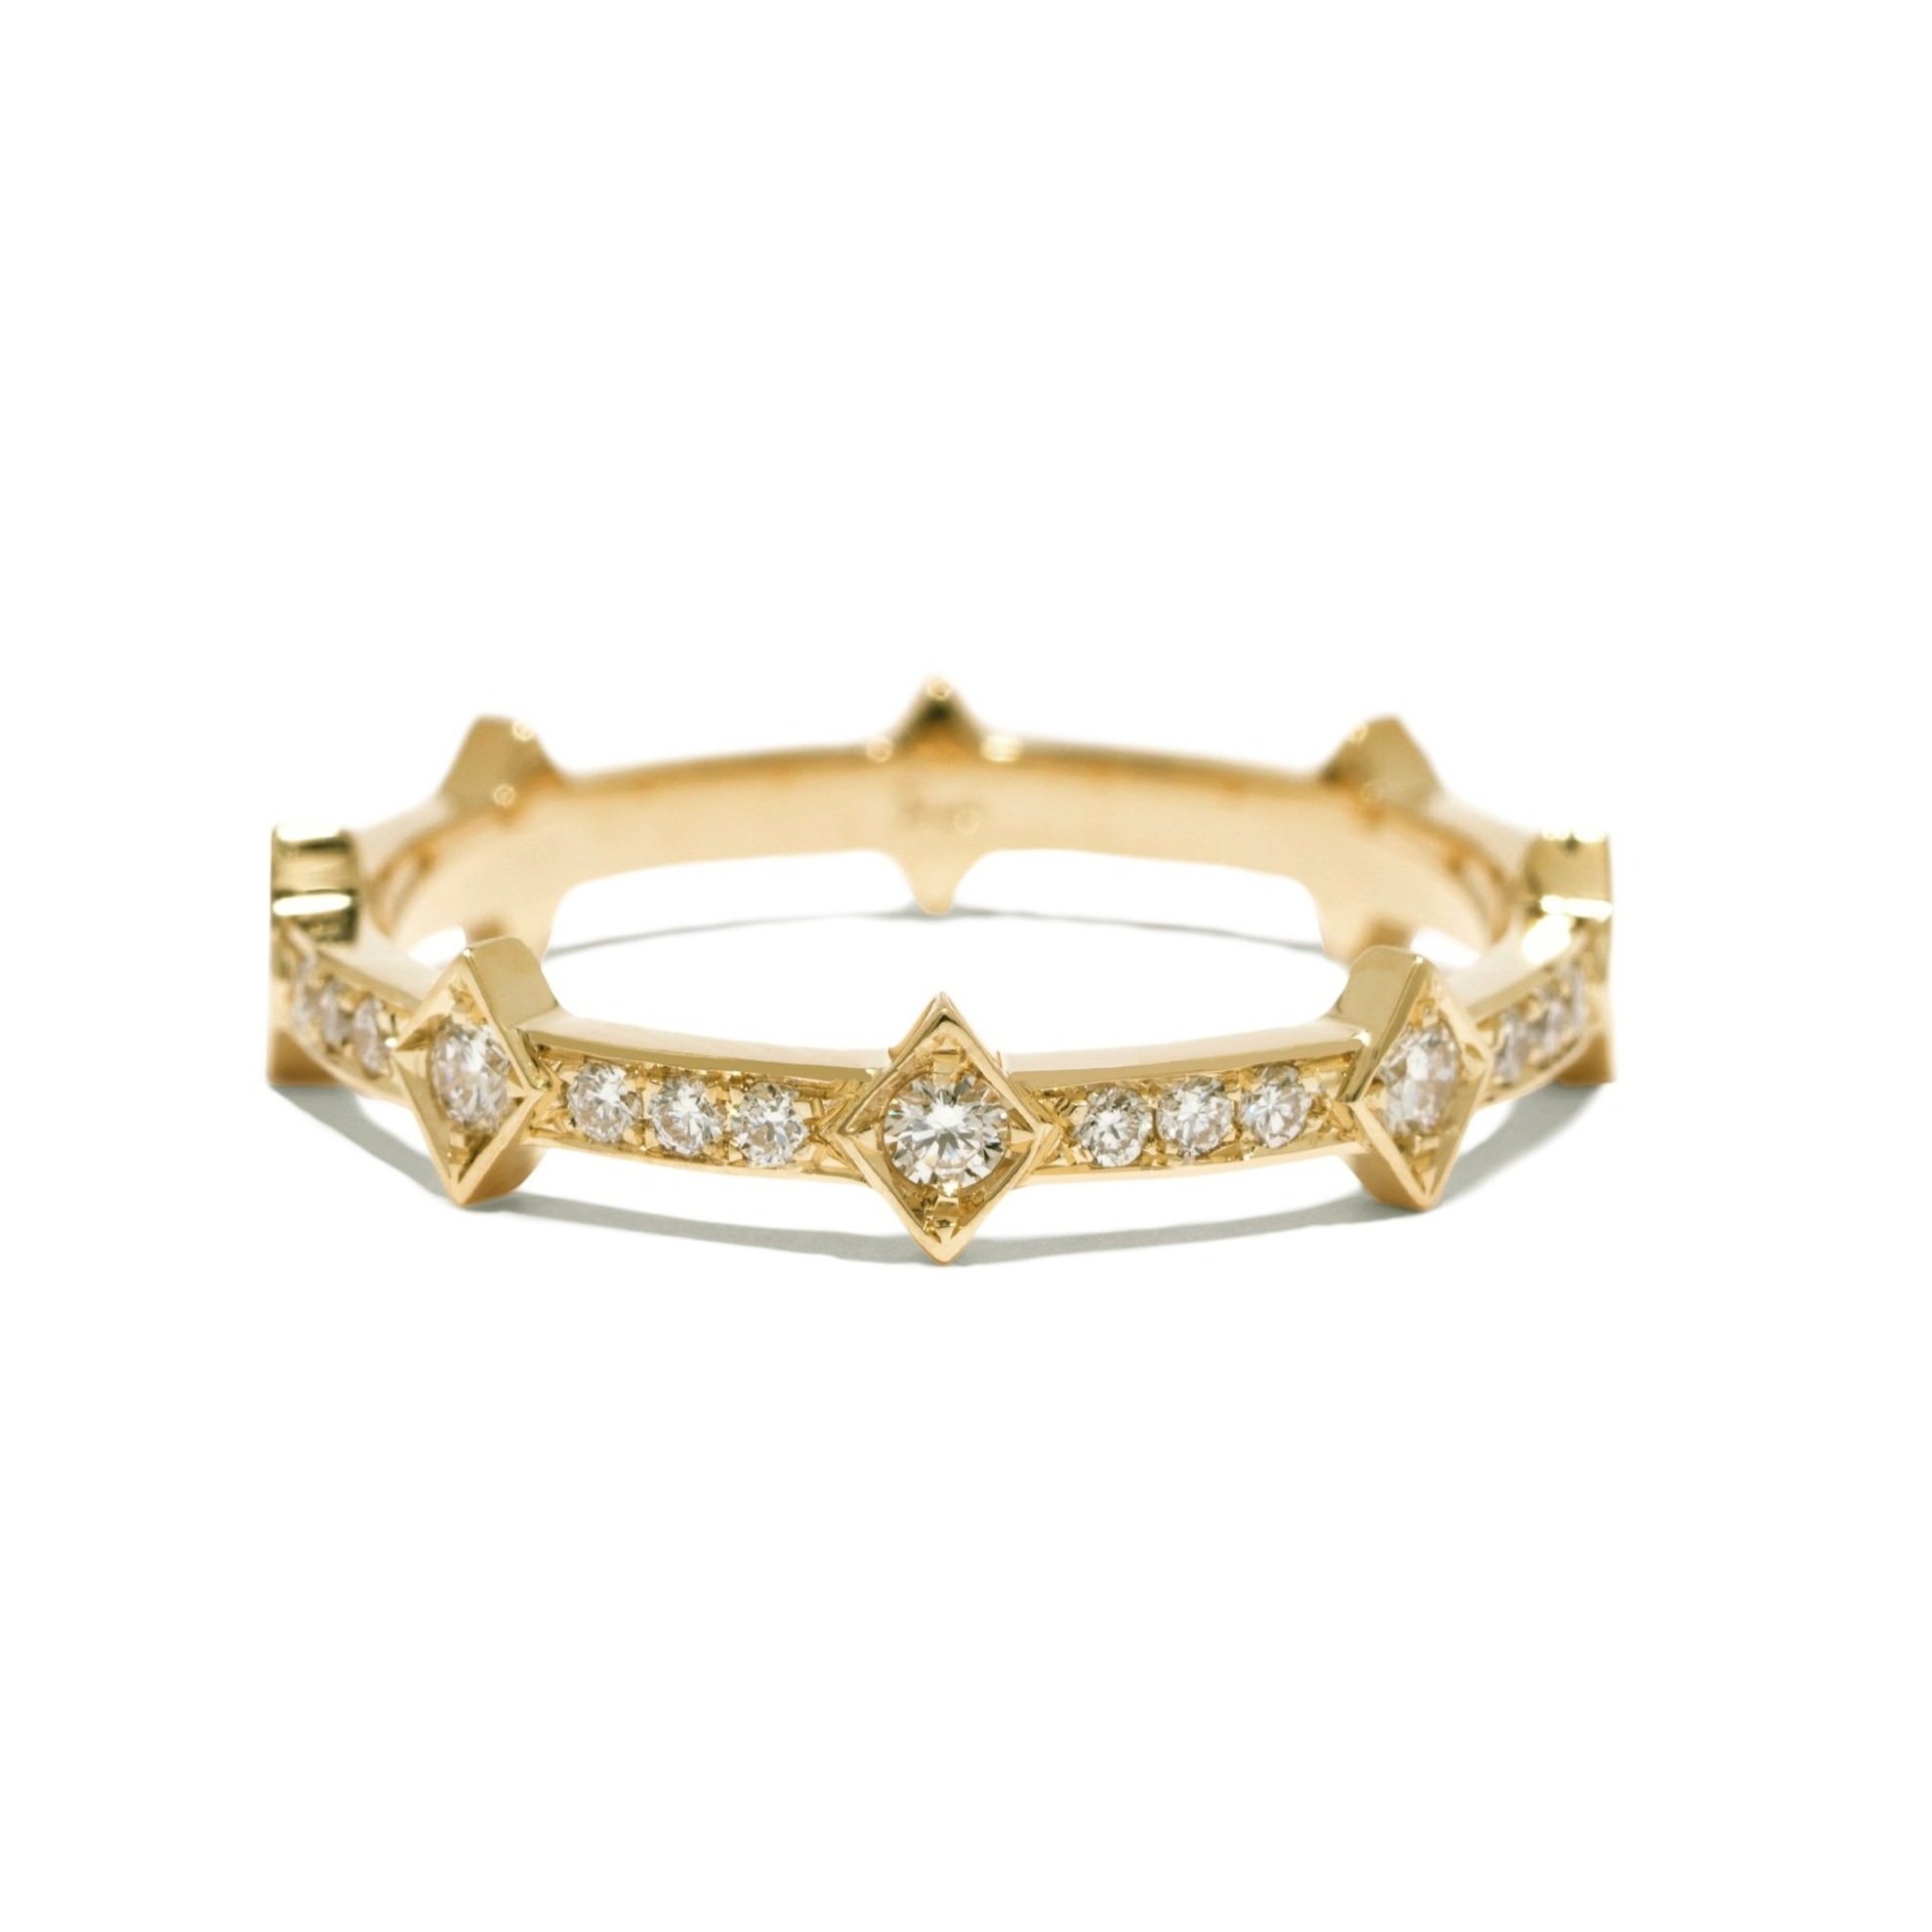 The first piece Baylee designed, the Illuminate-Full diamond ring